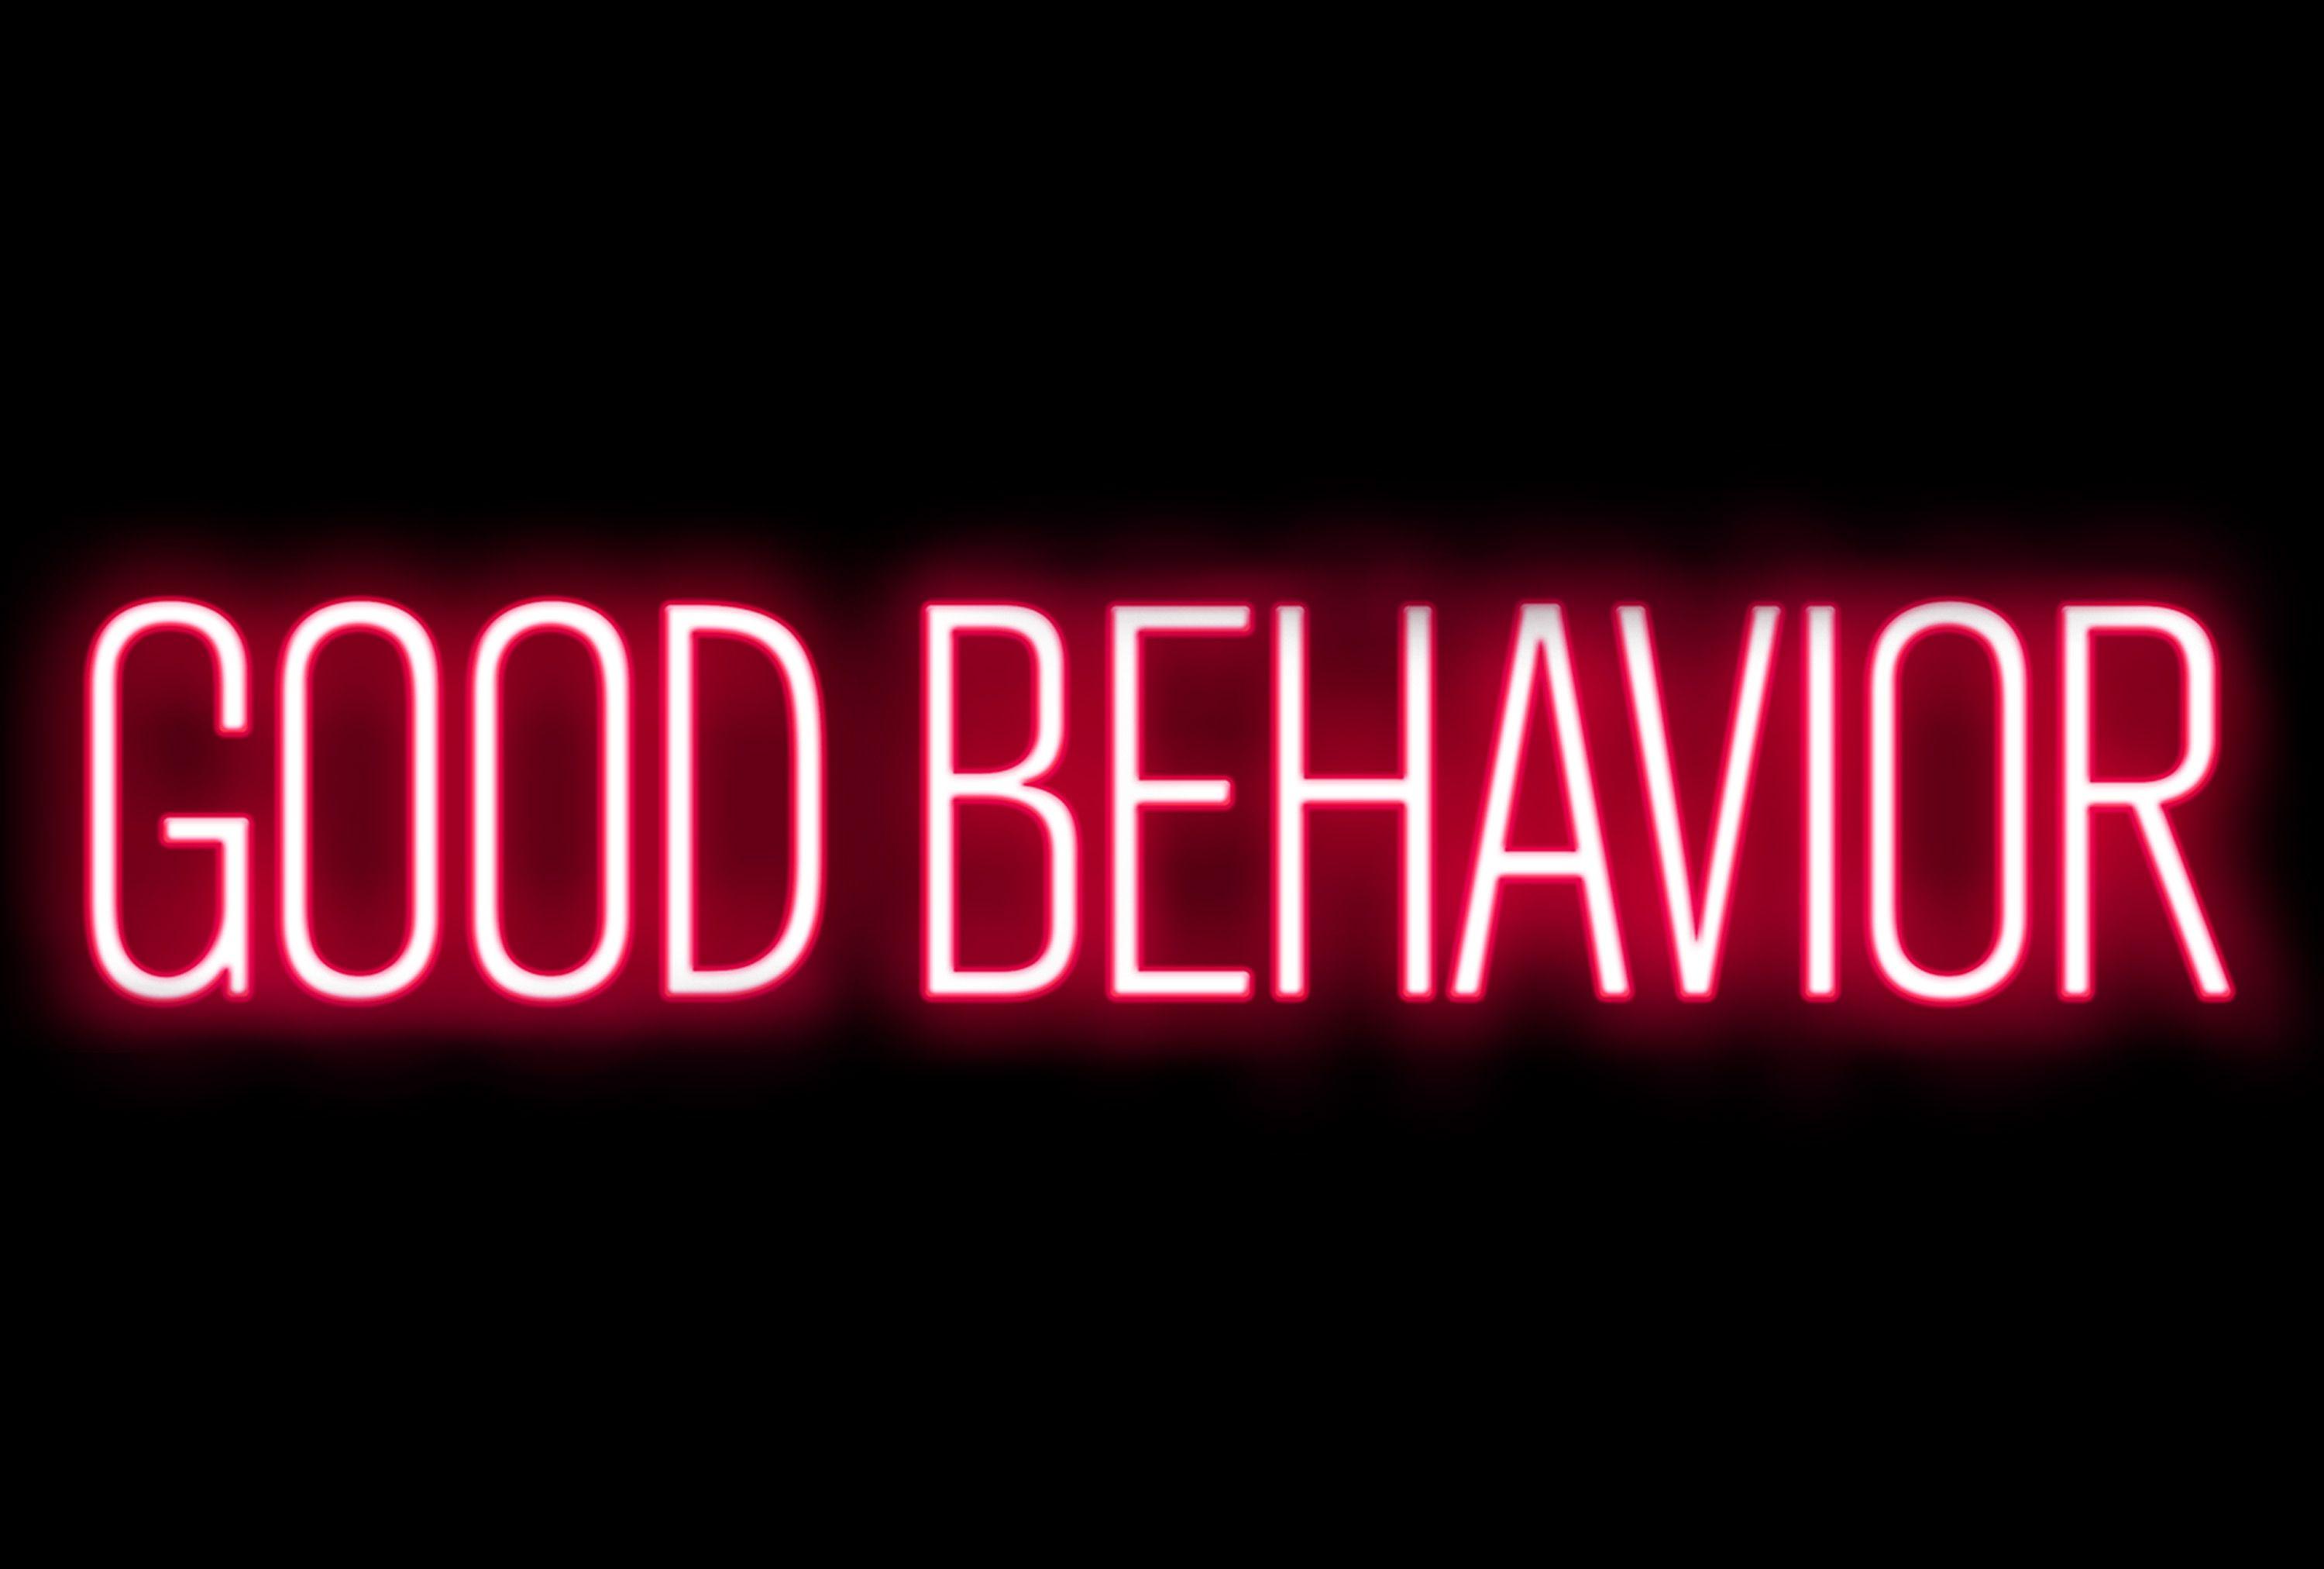 Behavior Logo - Good Behavior logo | Turner